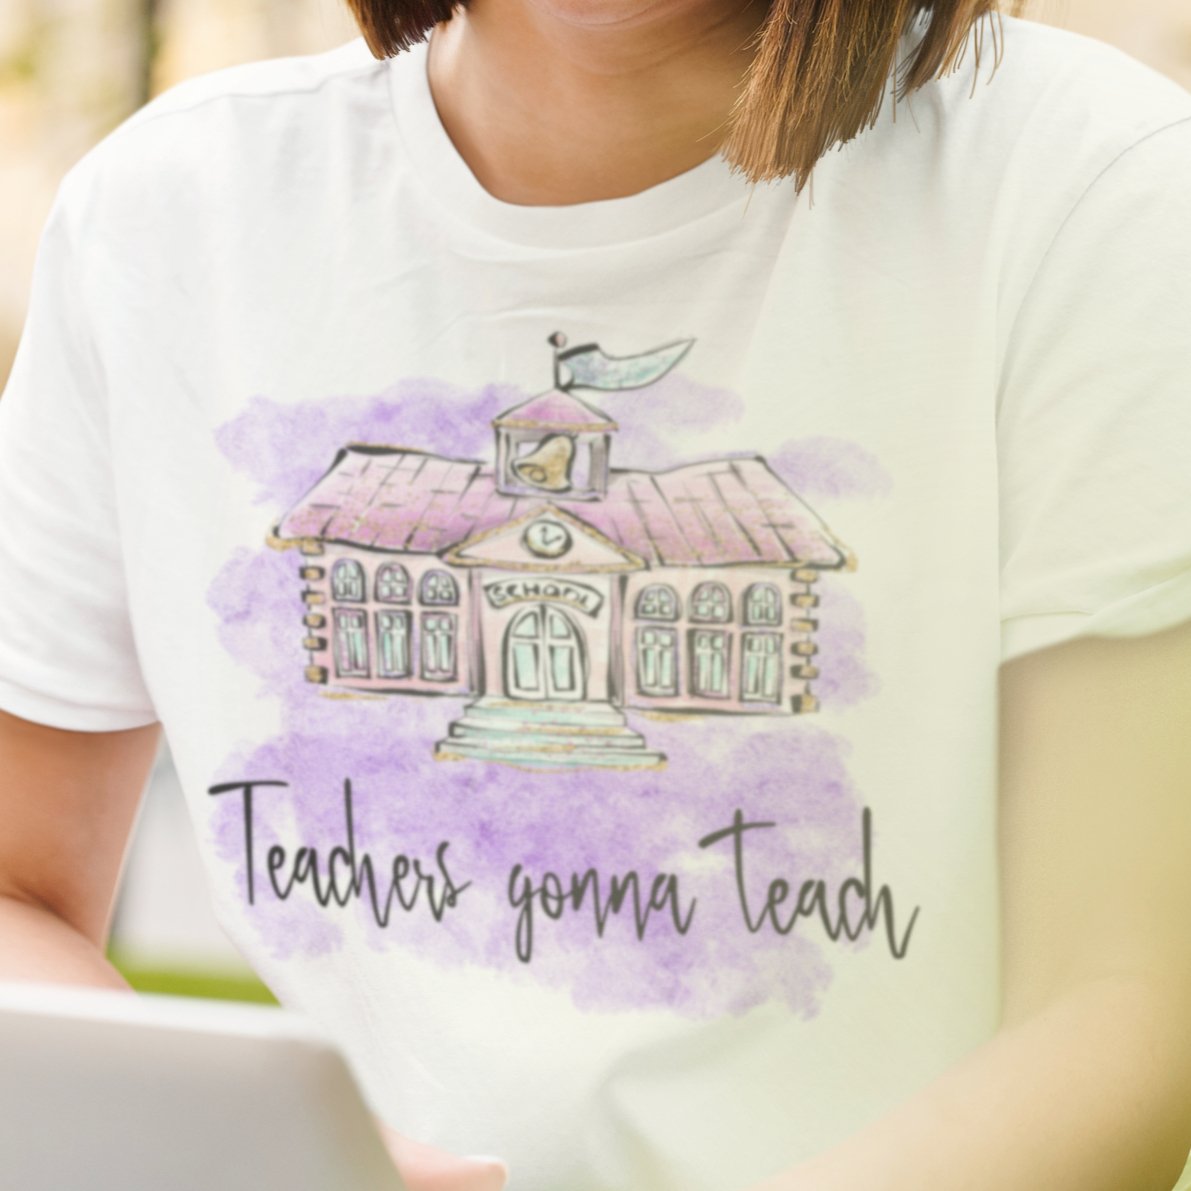 Teachers Gonna Teach: Inspirational Educator T-shirt – Where Passion Meets Comfort!